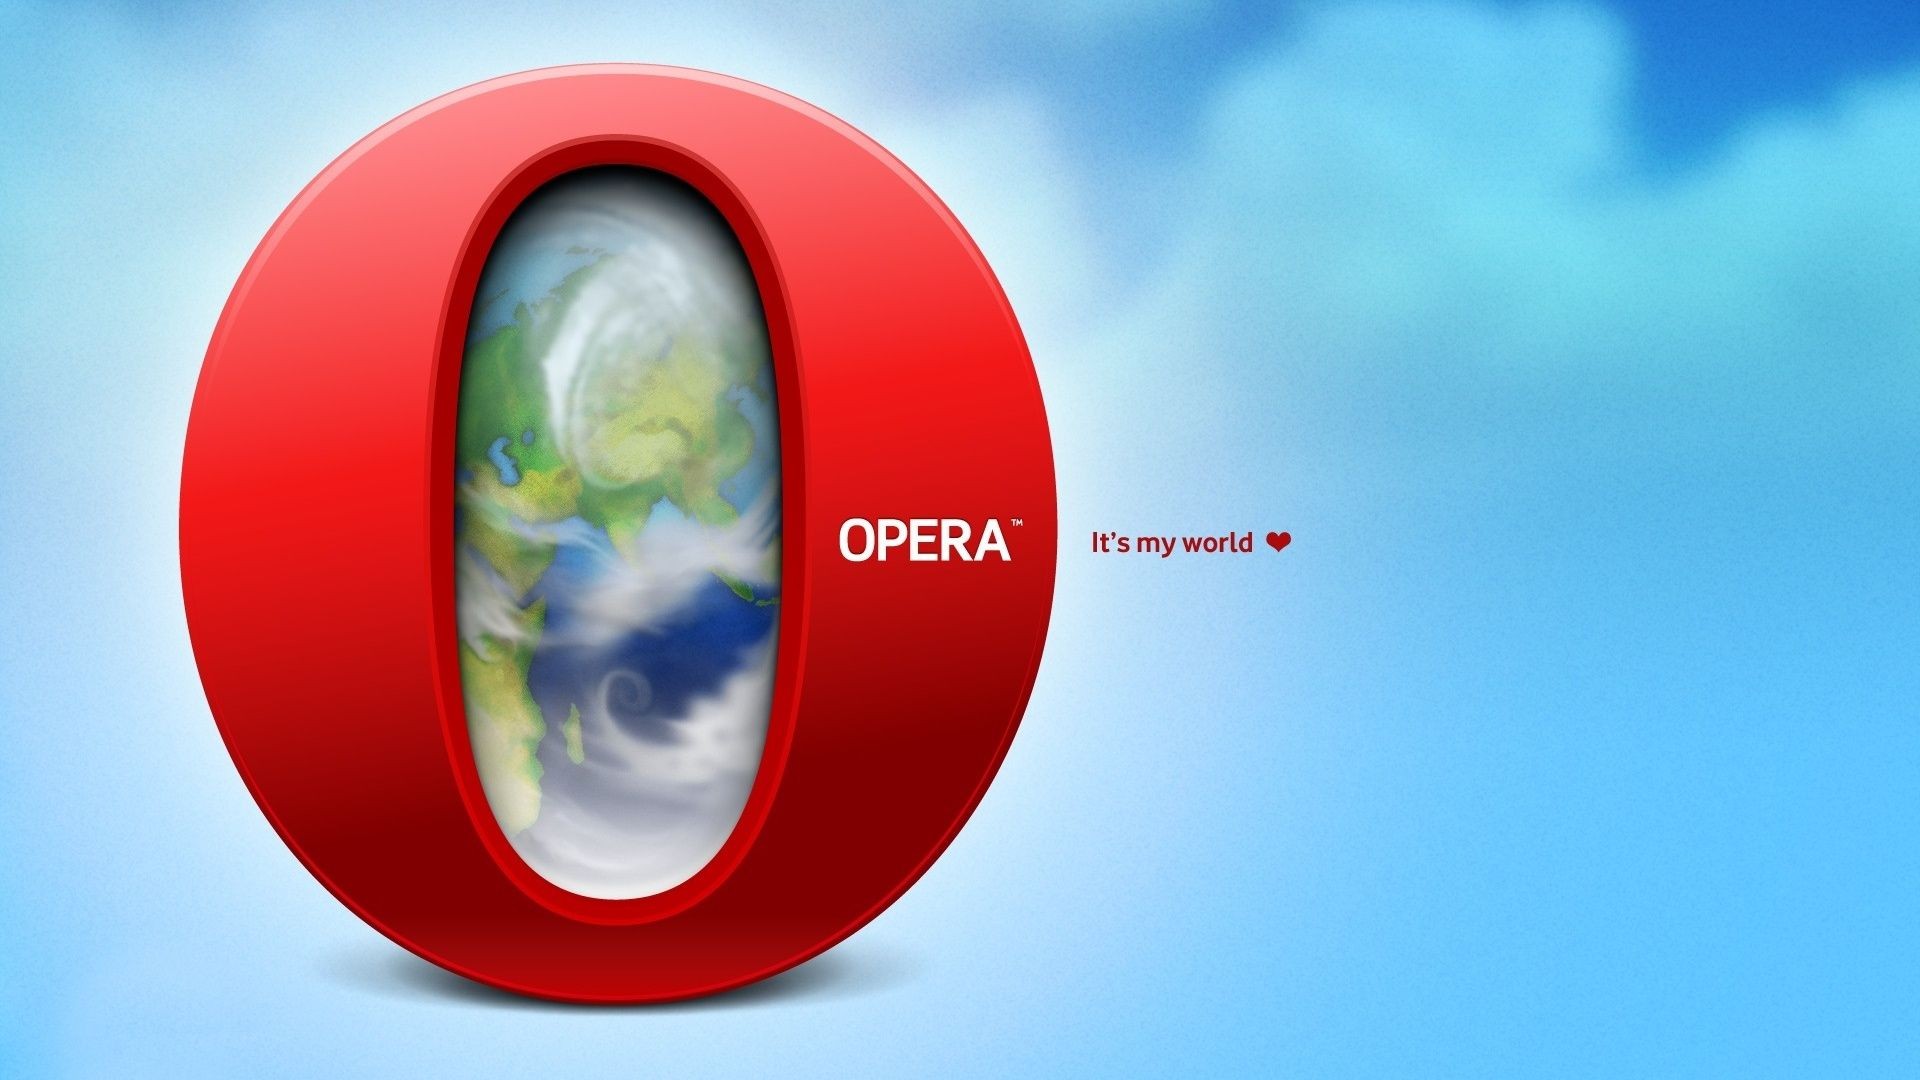 Opera Browser World Opera Red Humor 1920x1080